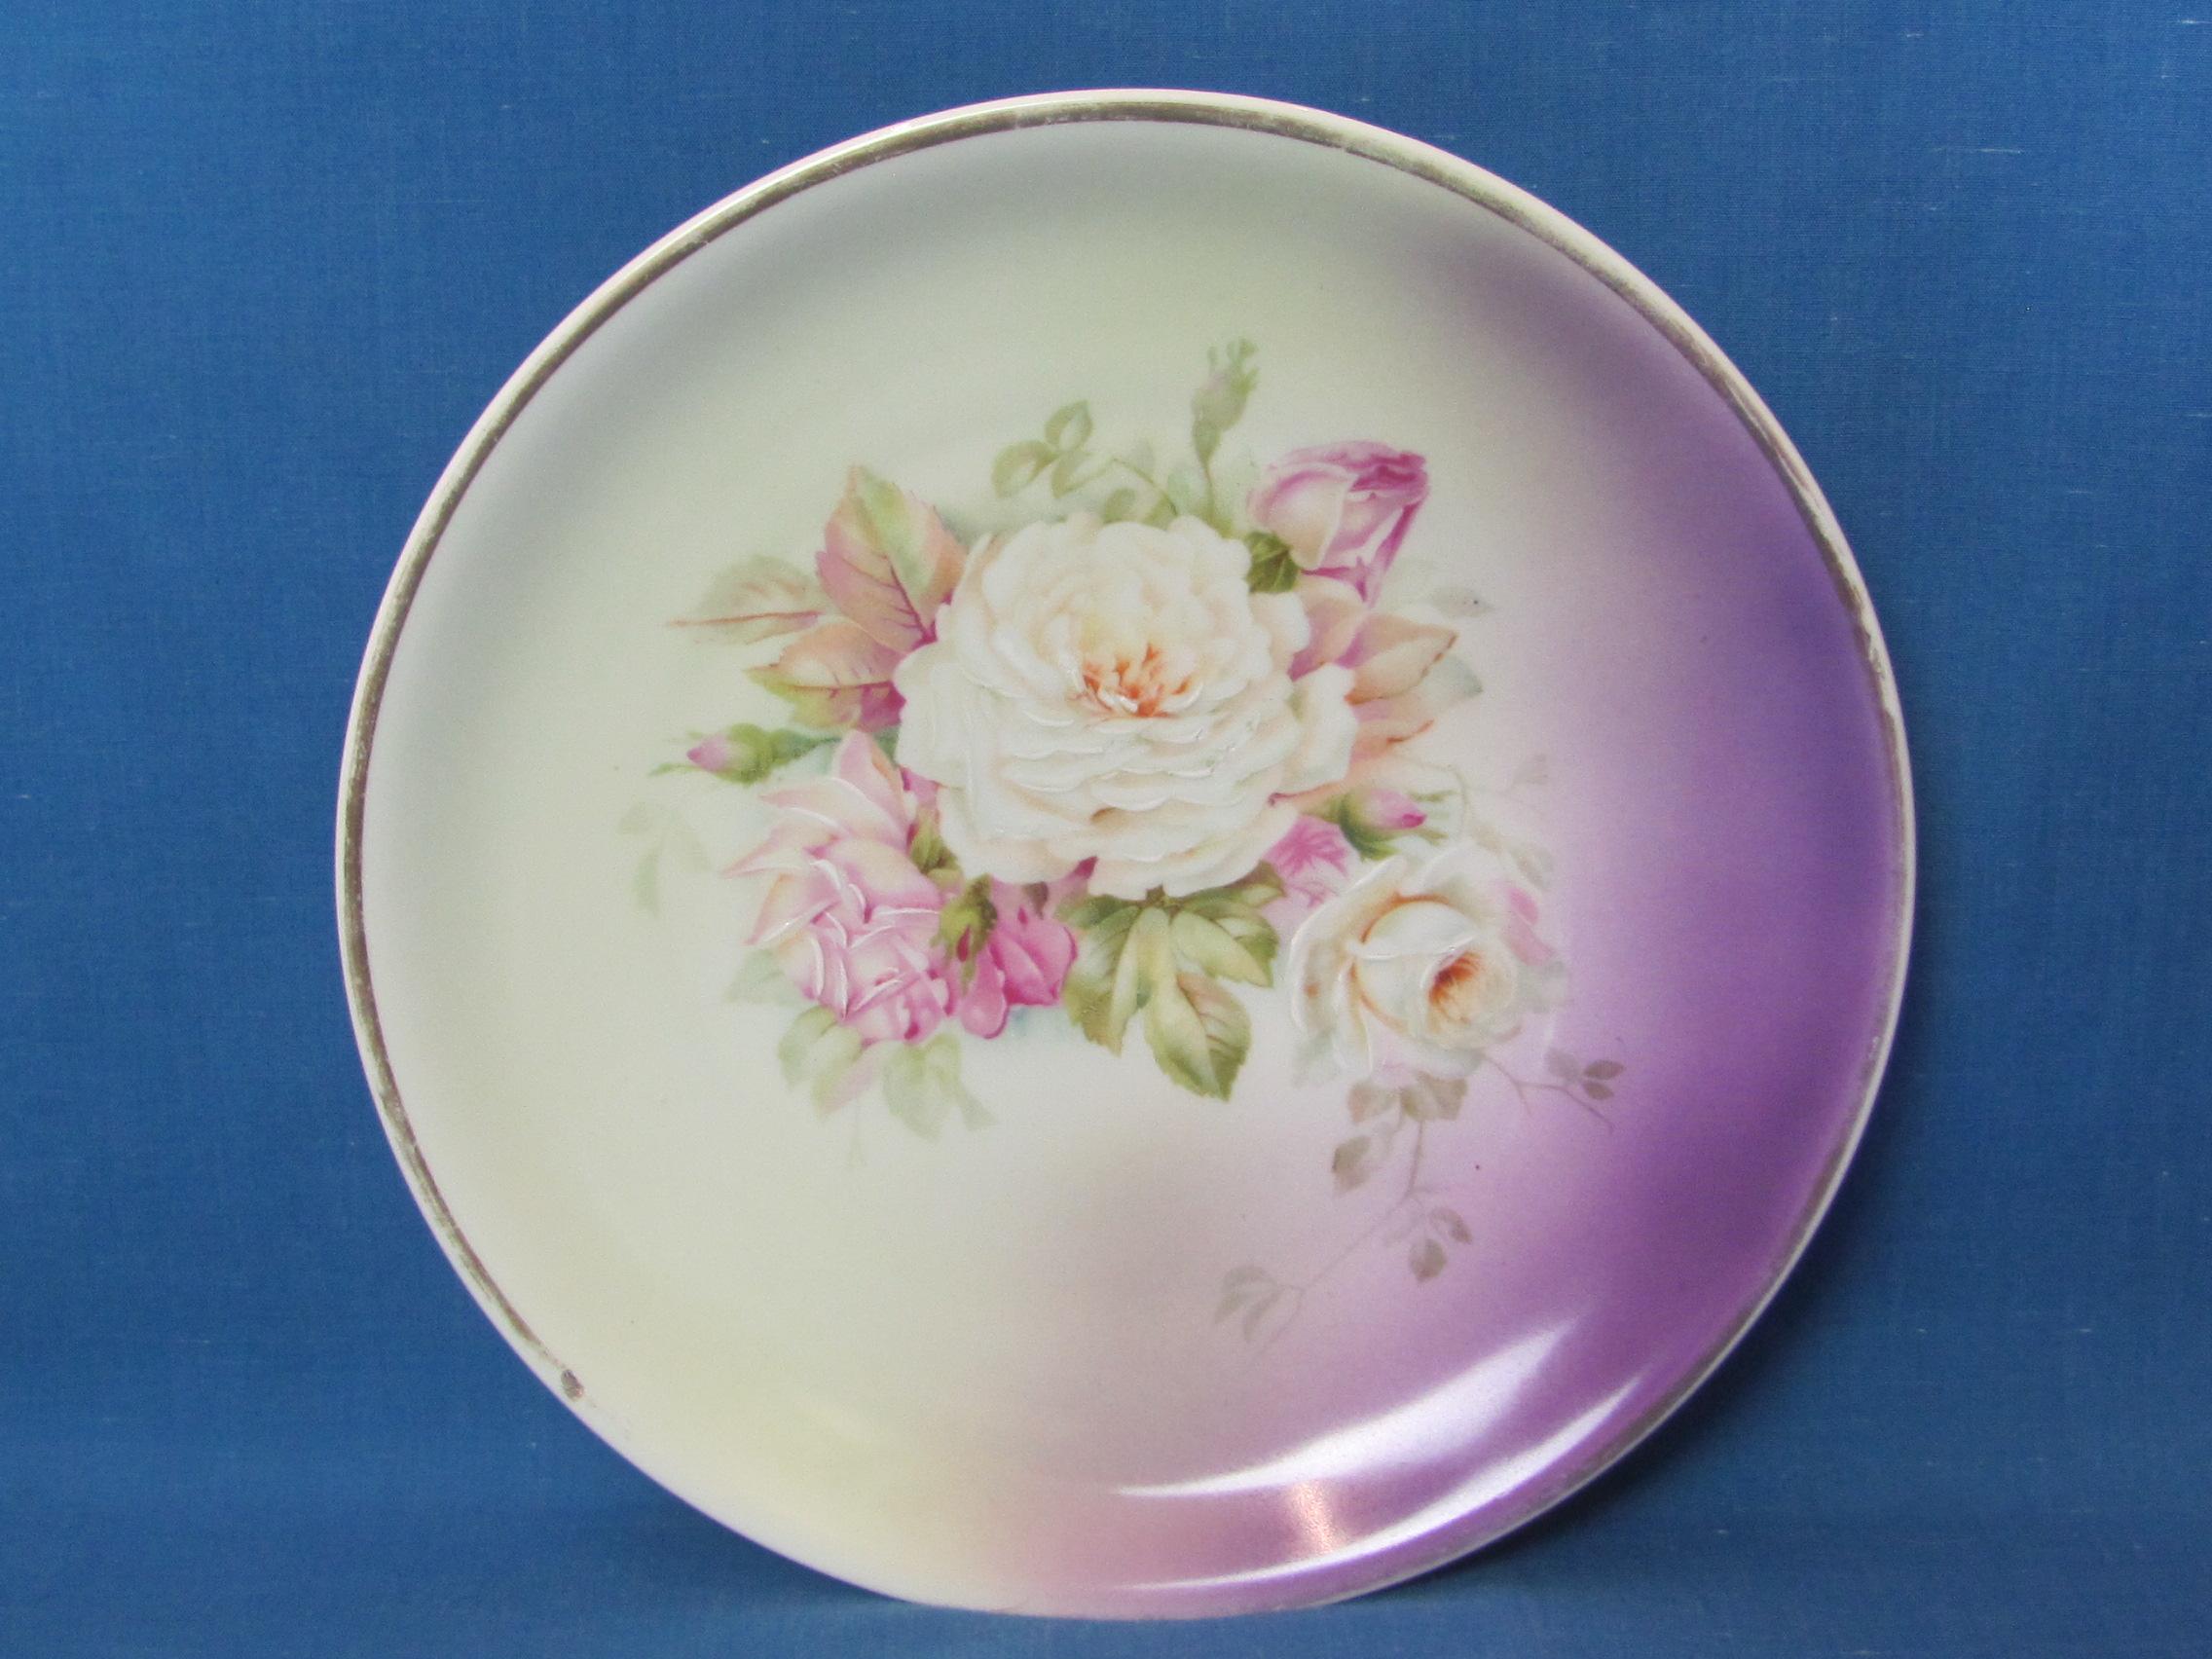 Lot of 4 Decorative Porcelain/Ceramic Plates – Floral Designs – 1 w Transfer of Woman